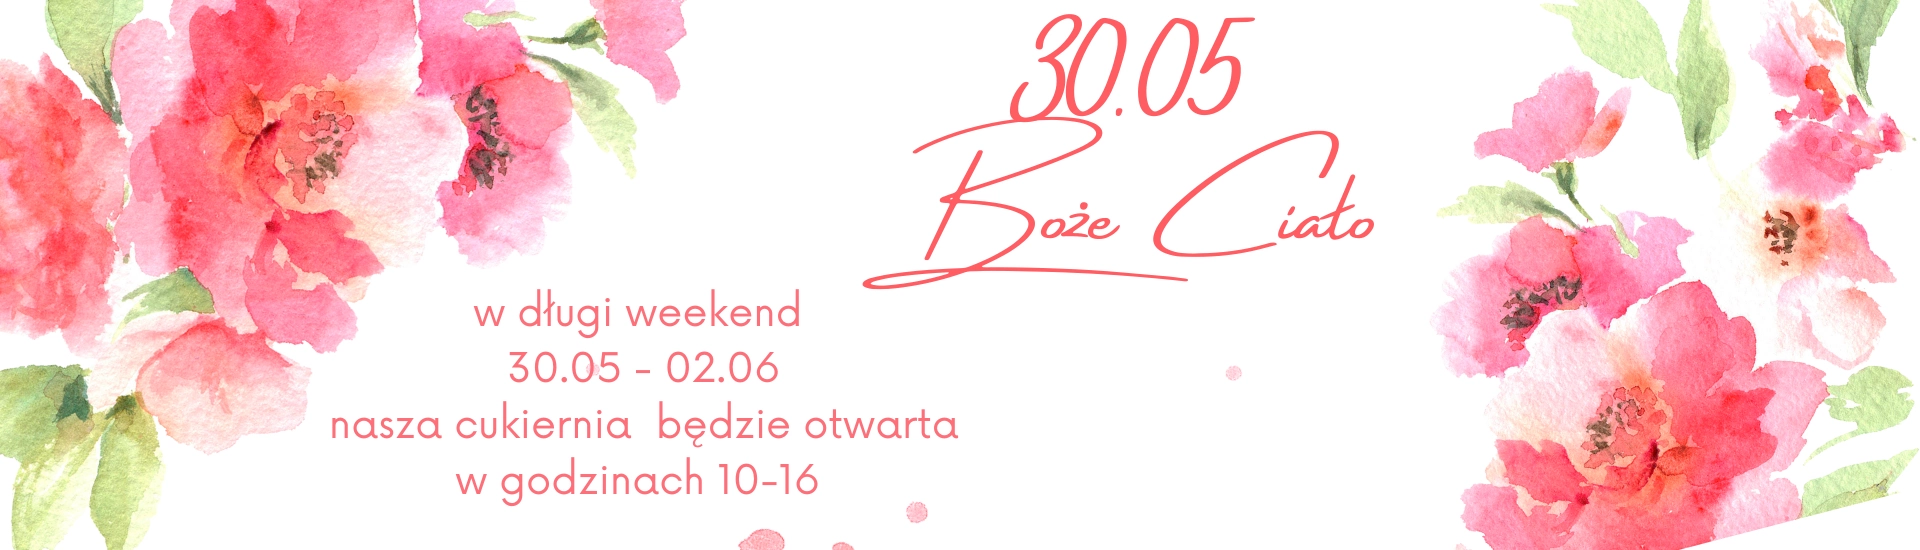 30-05-Boze-Cialo